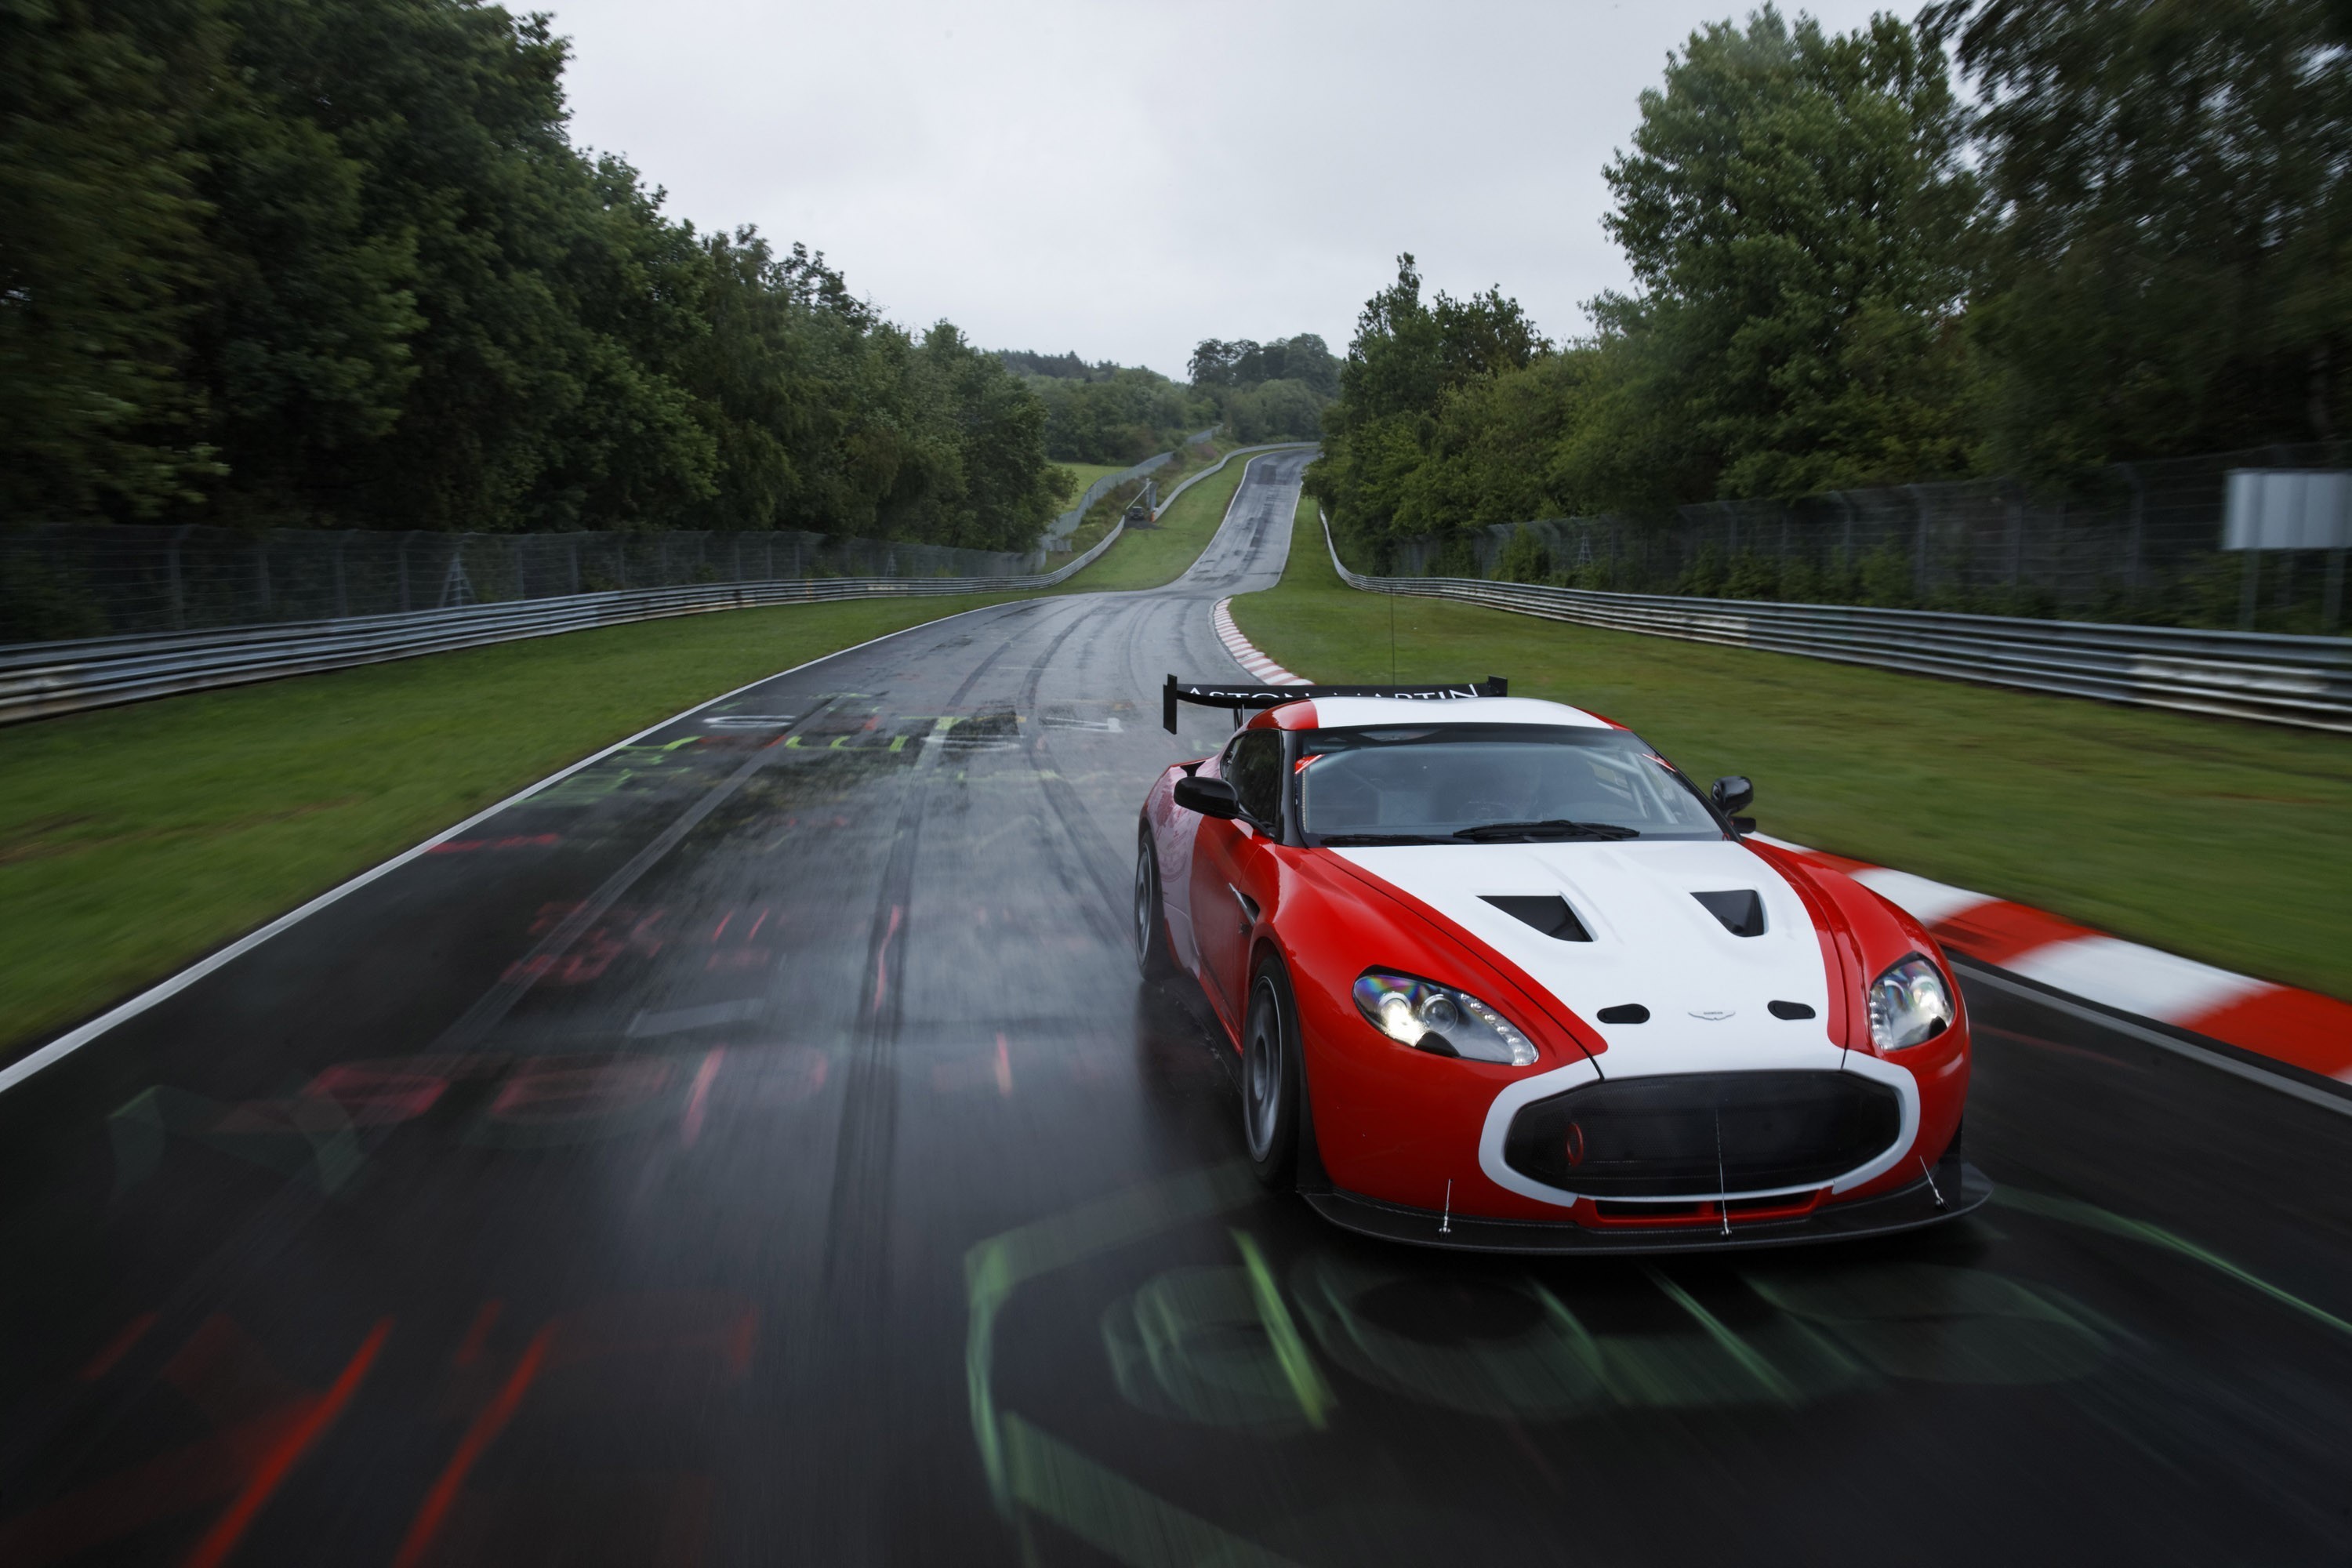 Aston Martin V12 Zagato Wallpapers